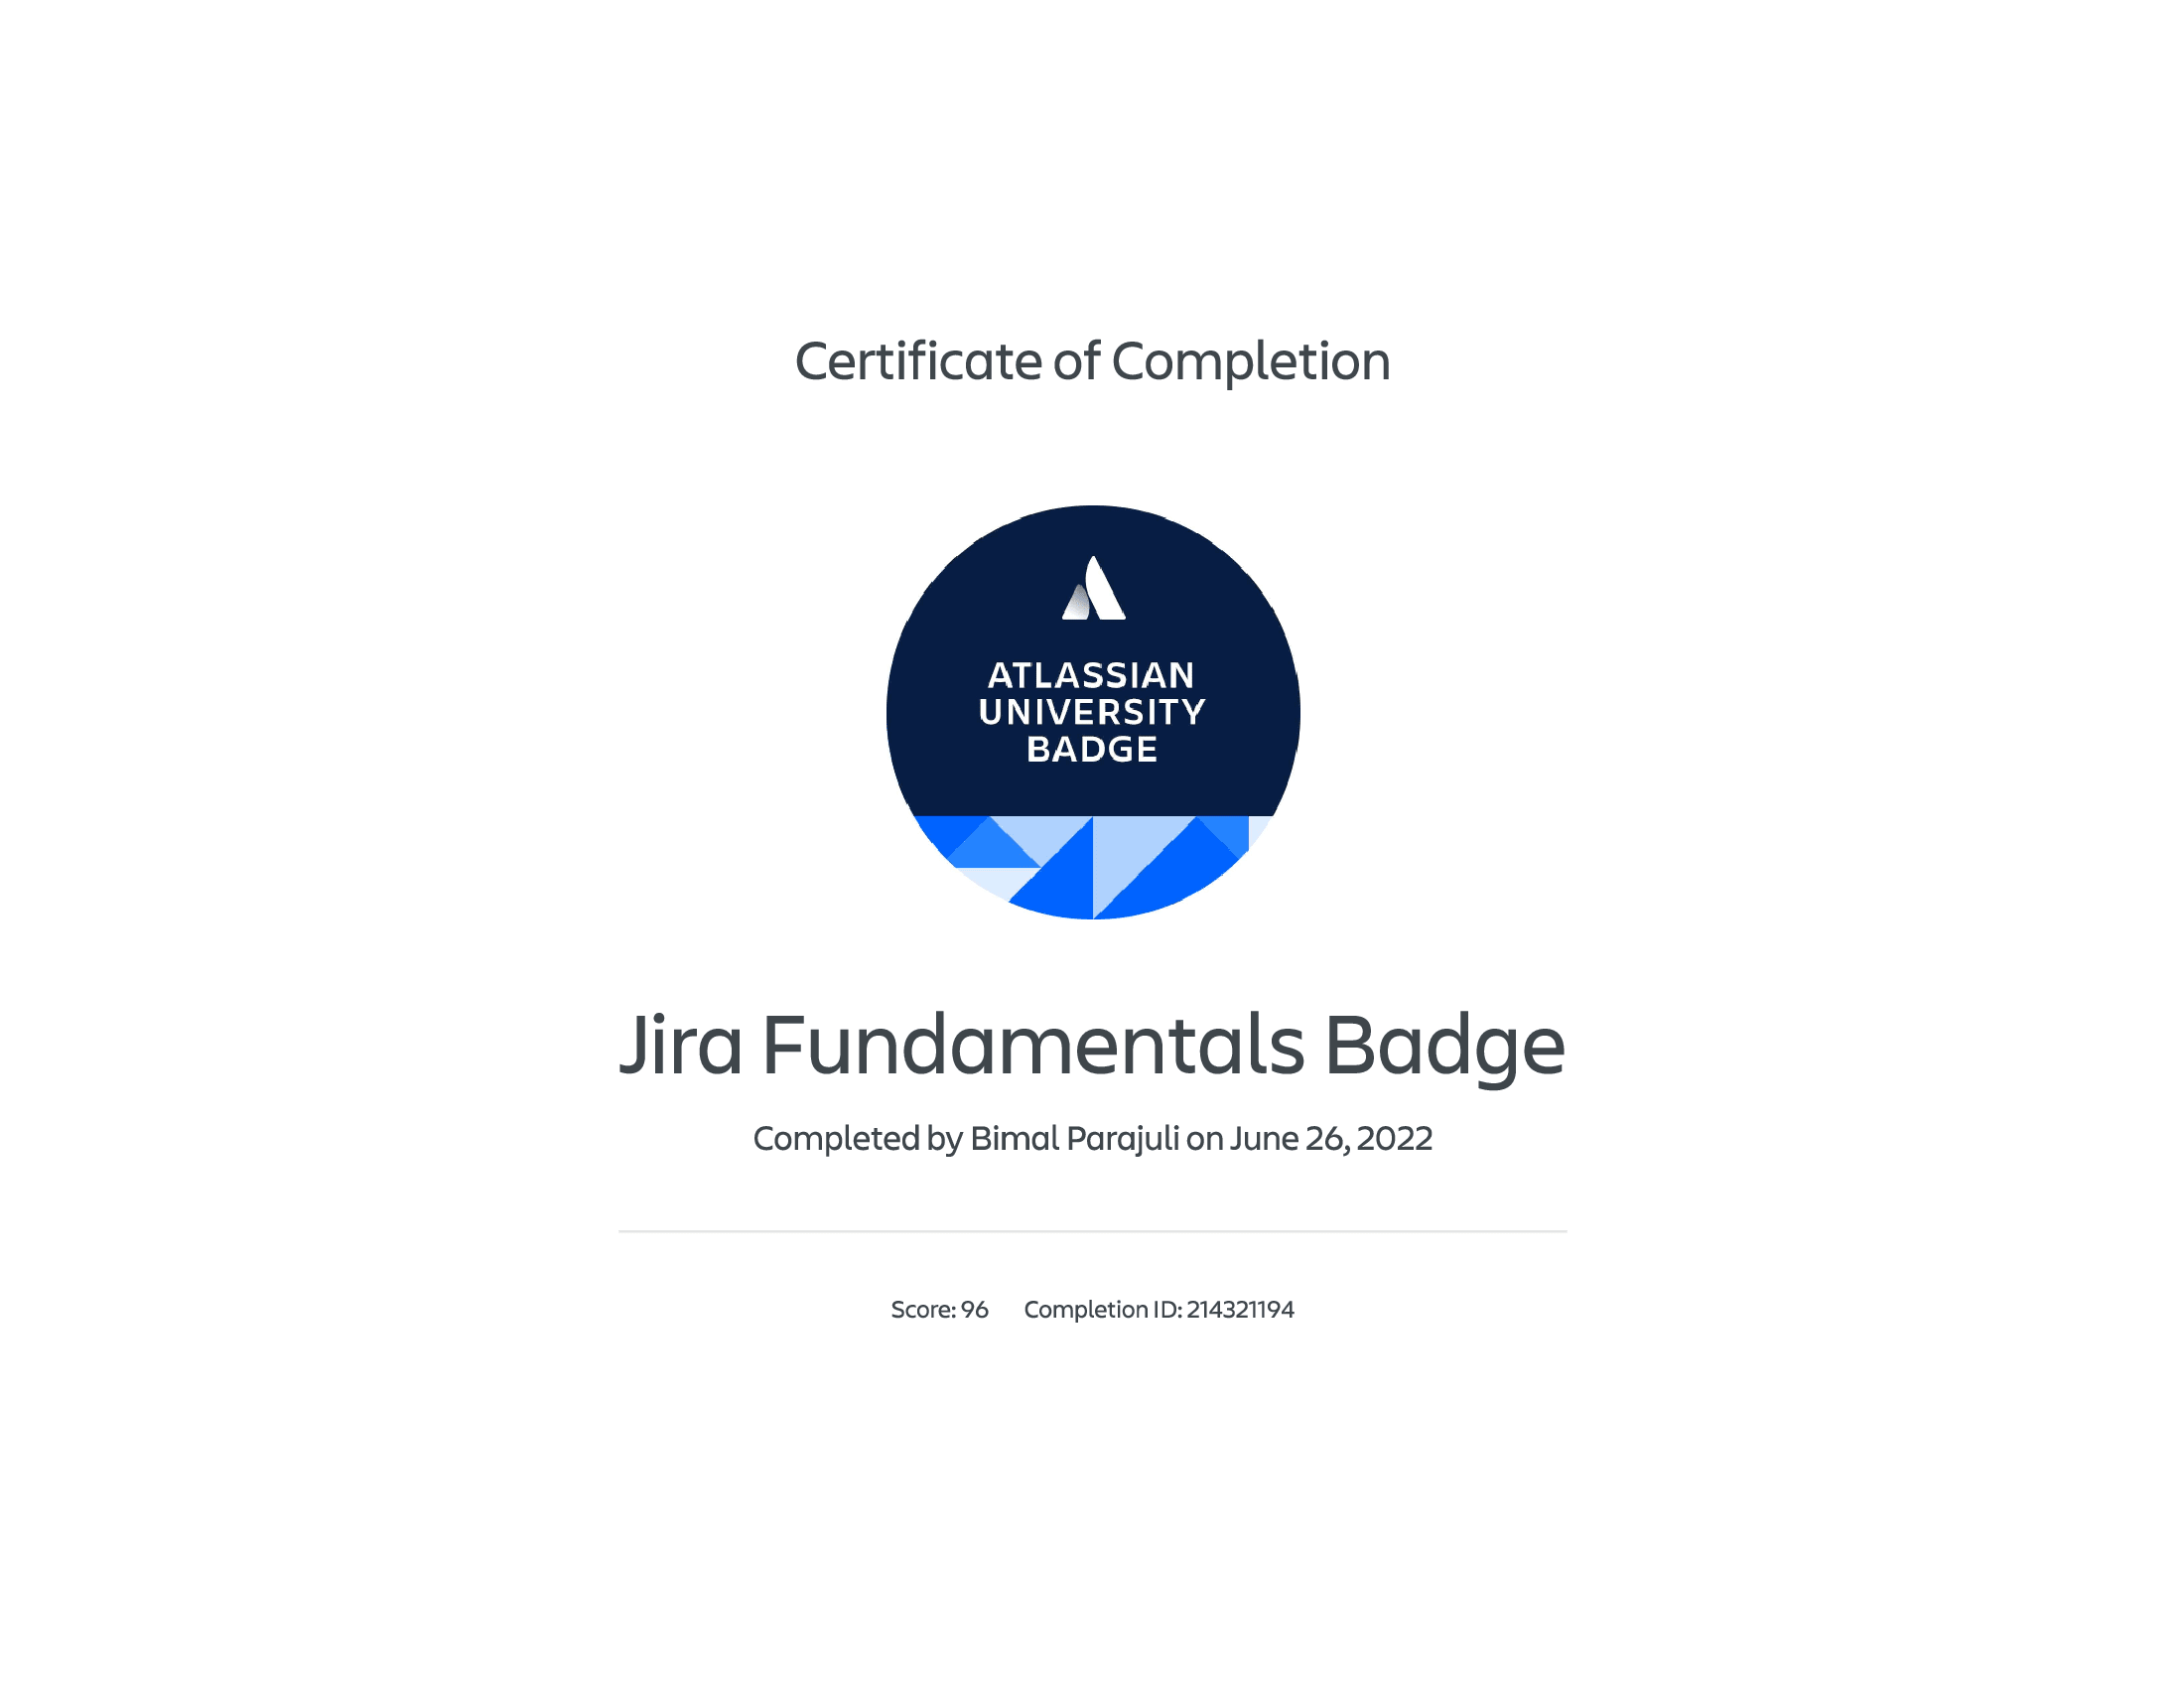 Jira Fundamentals Badge Earned by Bimal Parajuli from Atlassian University.